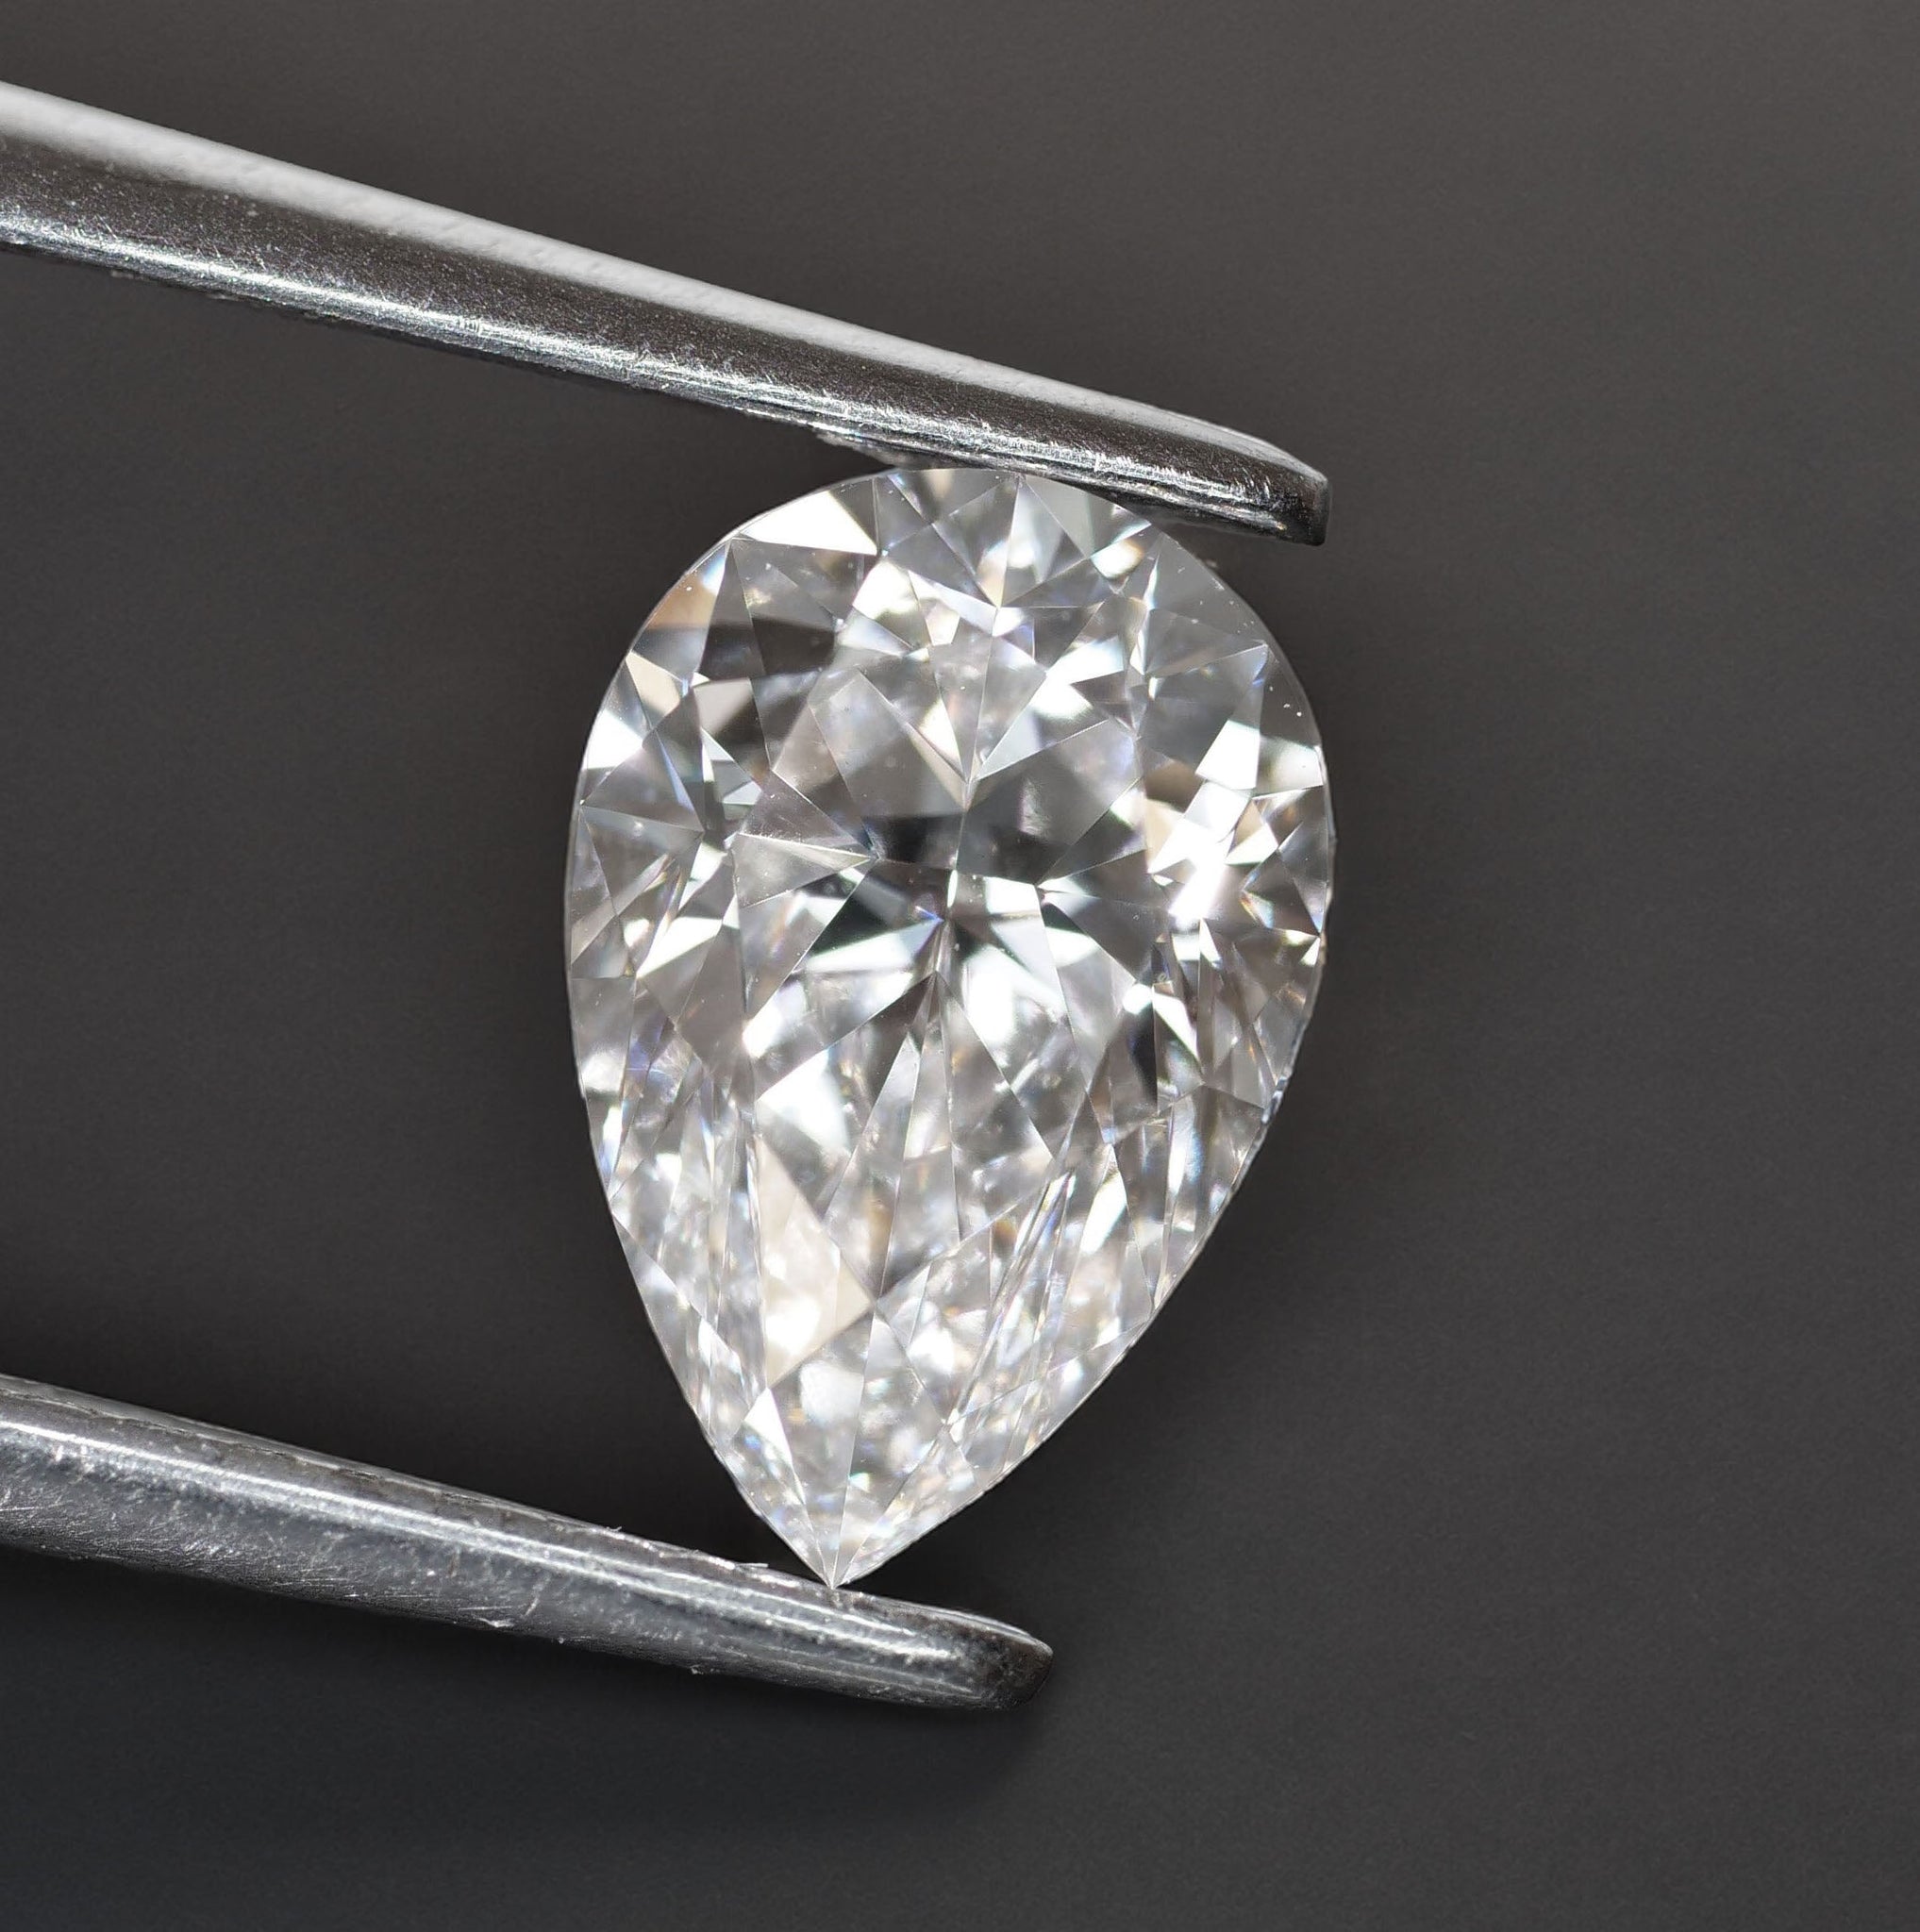 Natural diamond | GIA certified, pear cut 8x5.3 mm, E color, VS1, 0.82ct - Eden Garden Jewelry™